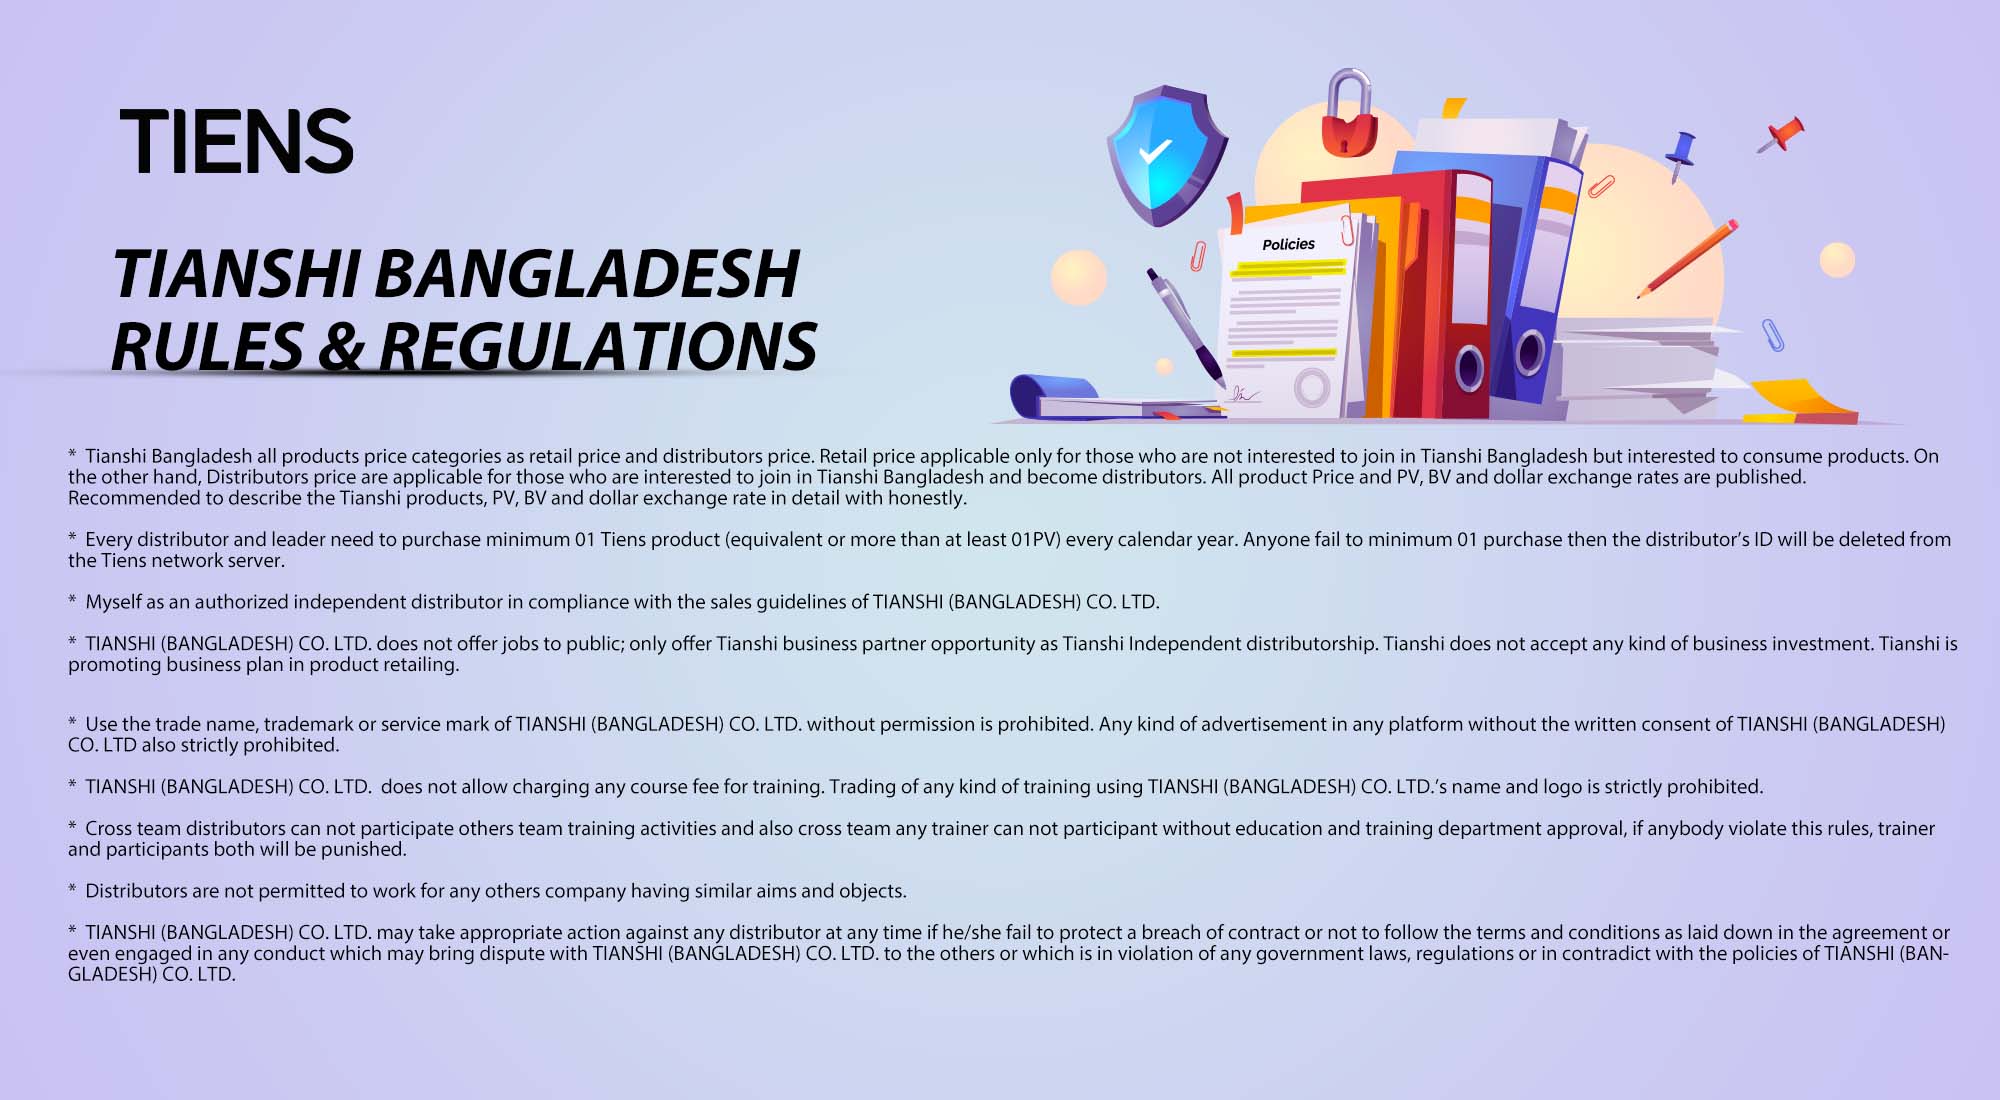 Tianshi Bangladesh Rules & Regulations